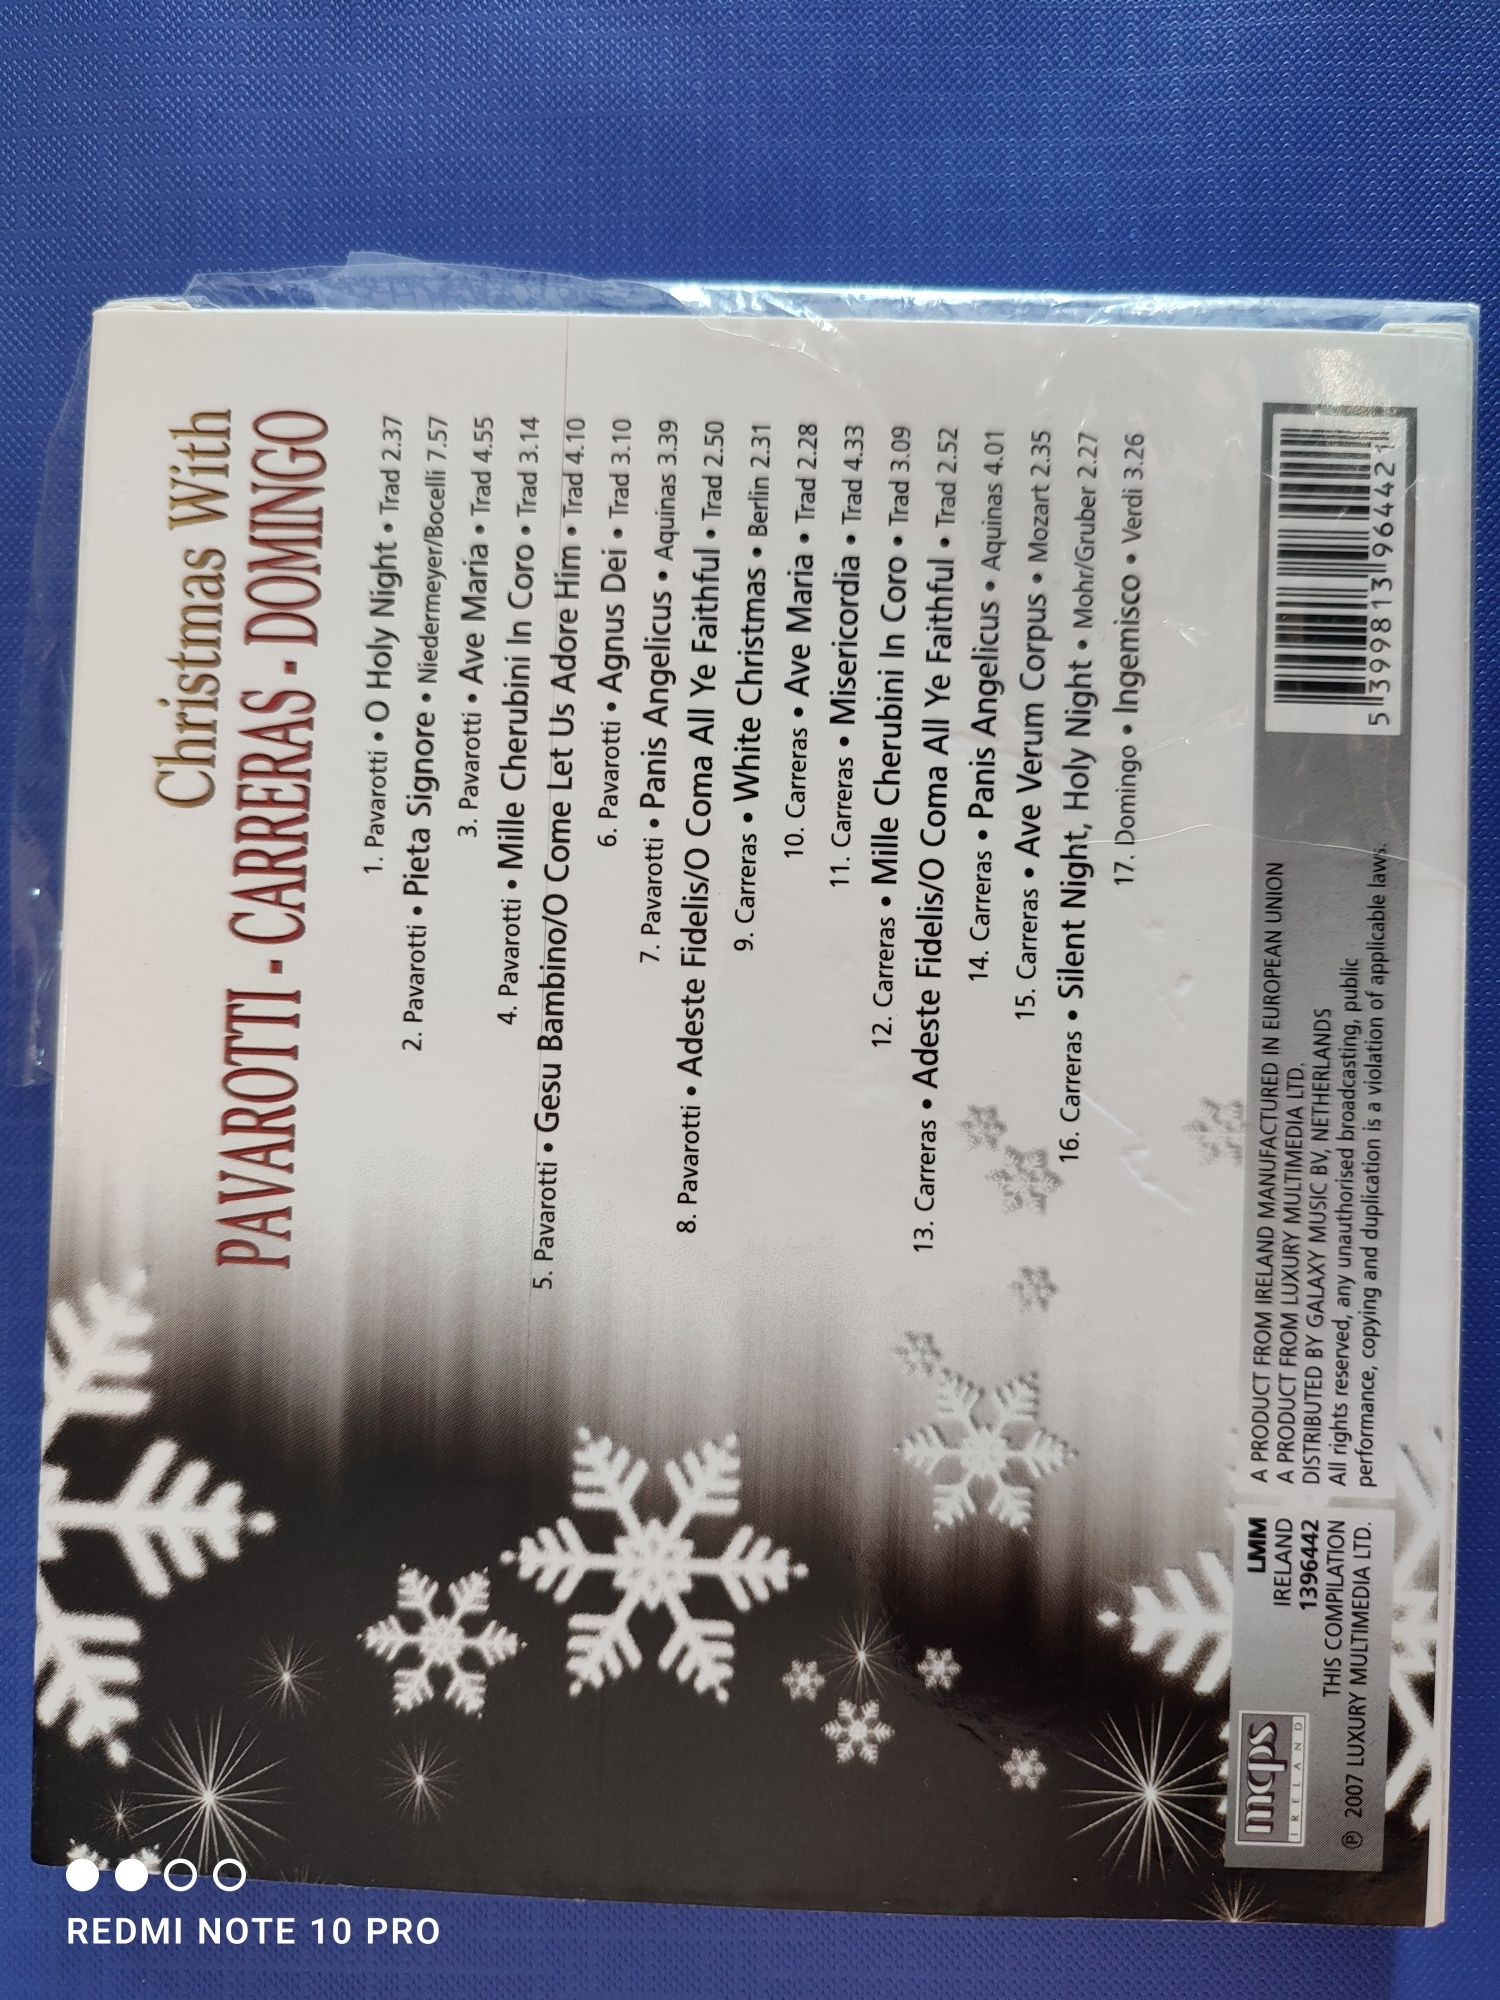 Cd original din 2007 nou, Pavarotti, Carreras, Domingo